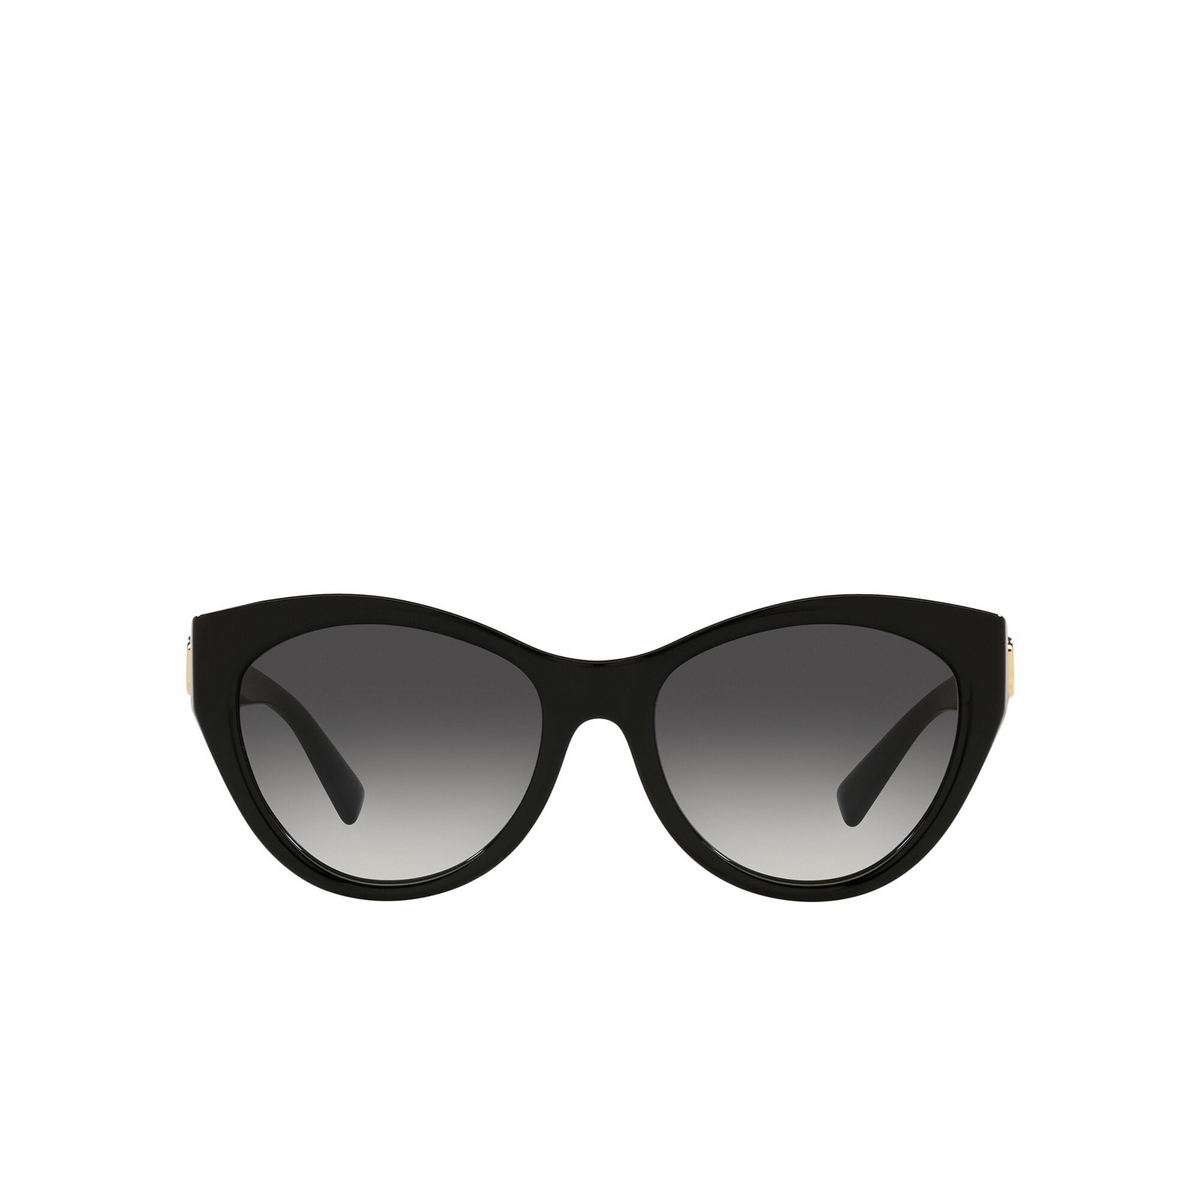 Valentino® Cat-eye Sunglasses: VA4109 color Black 50018G - front view.